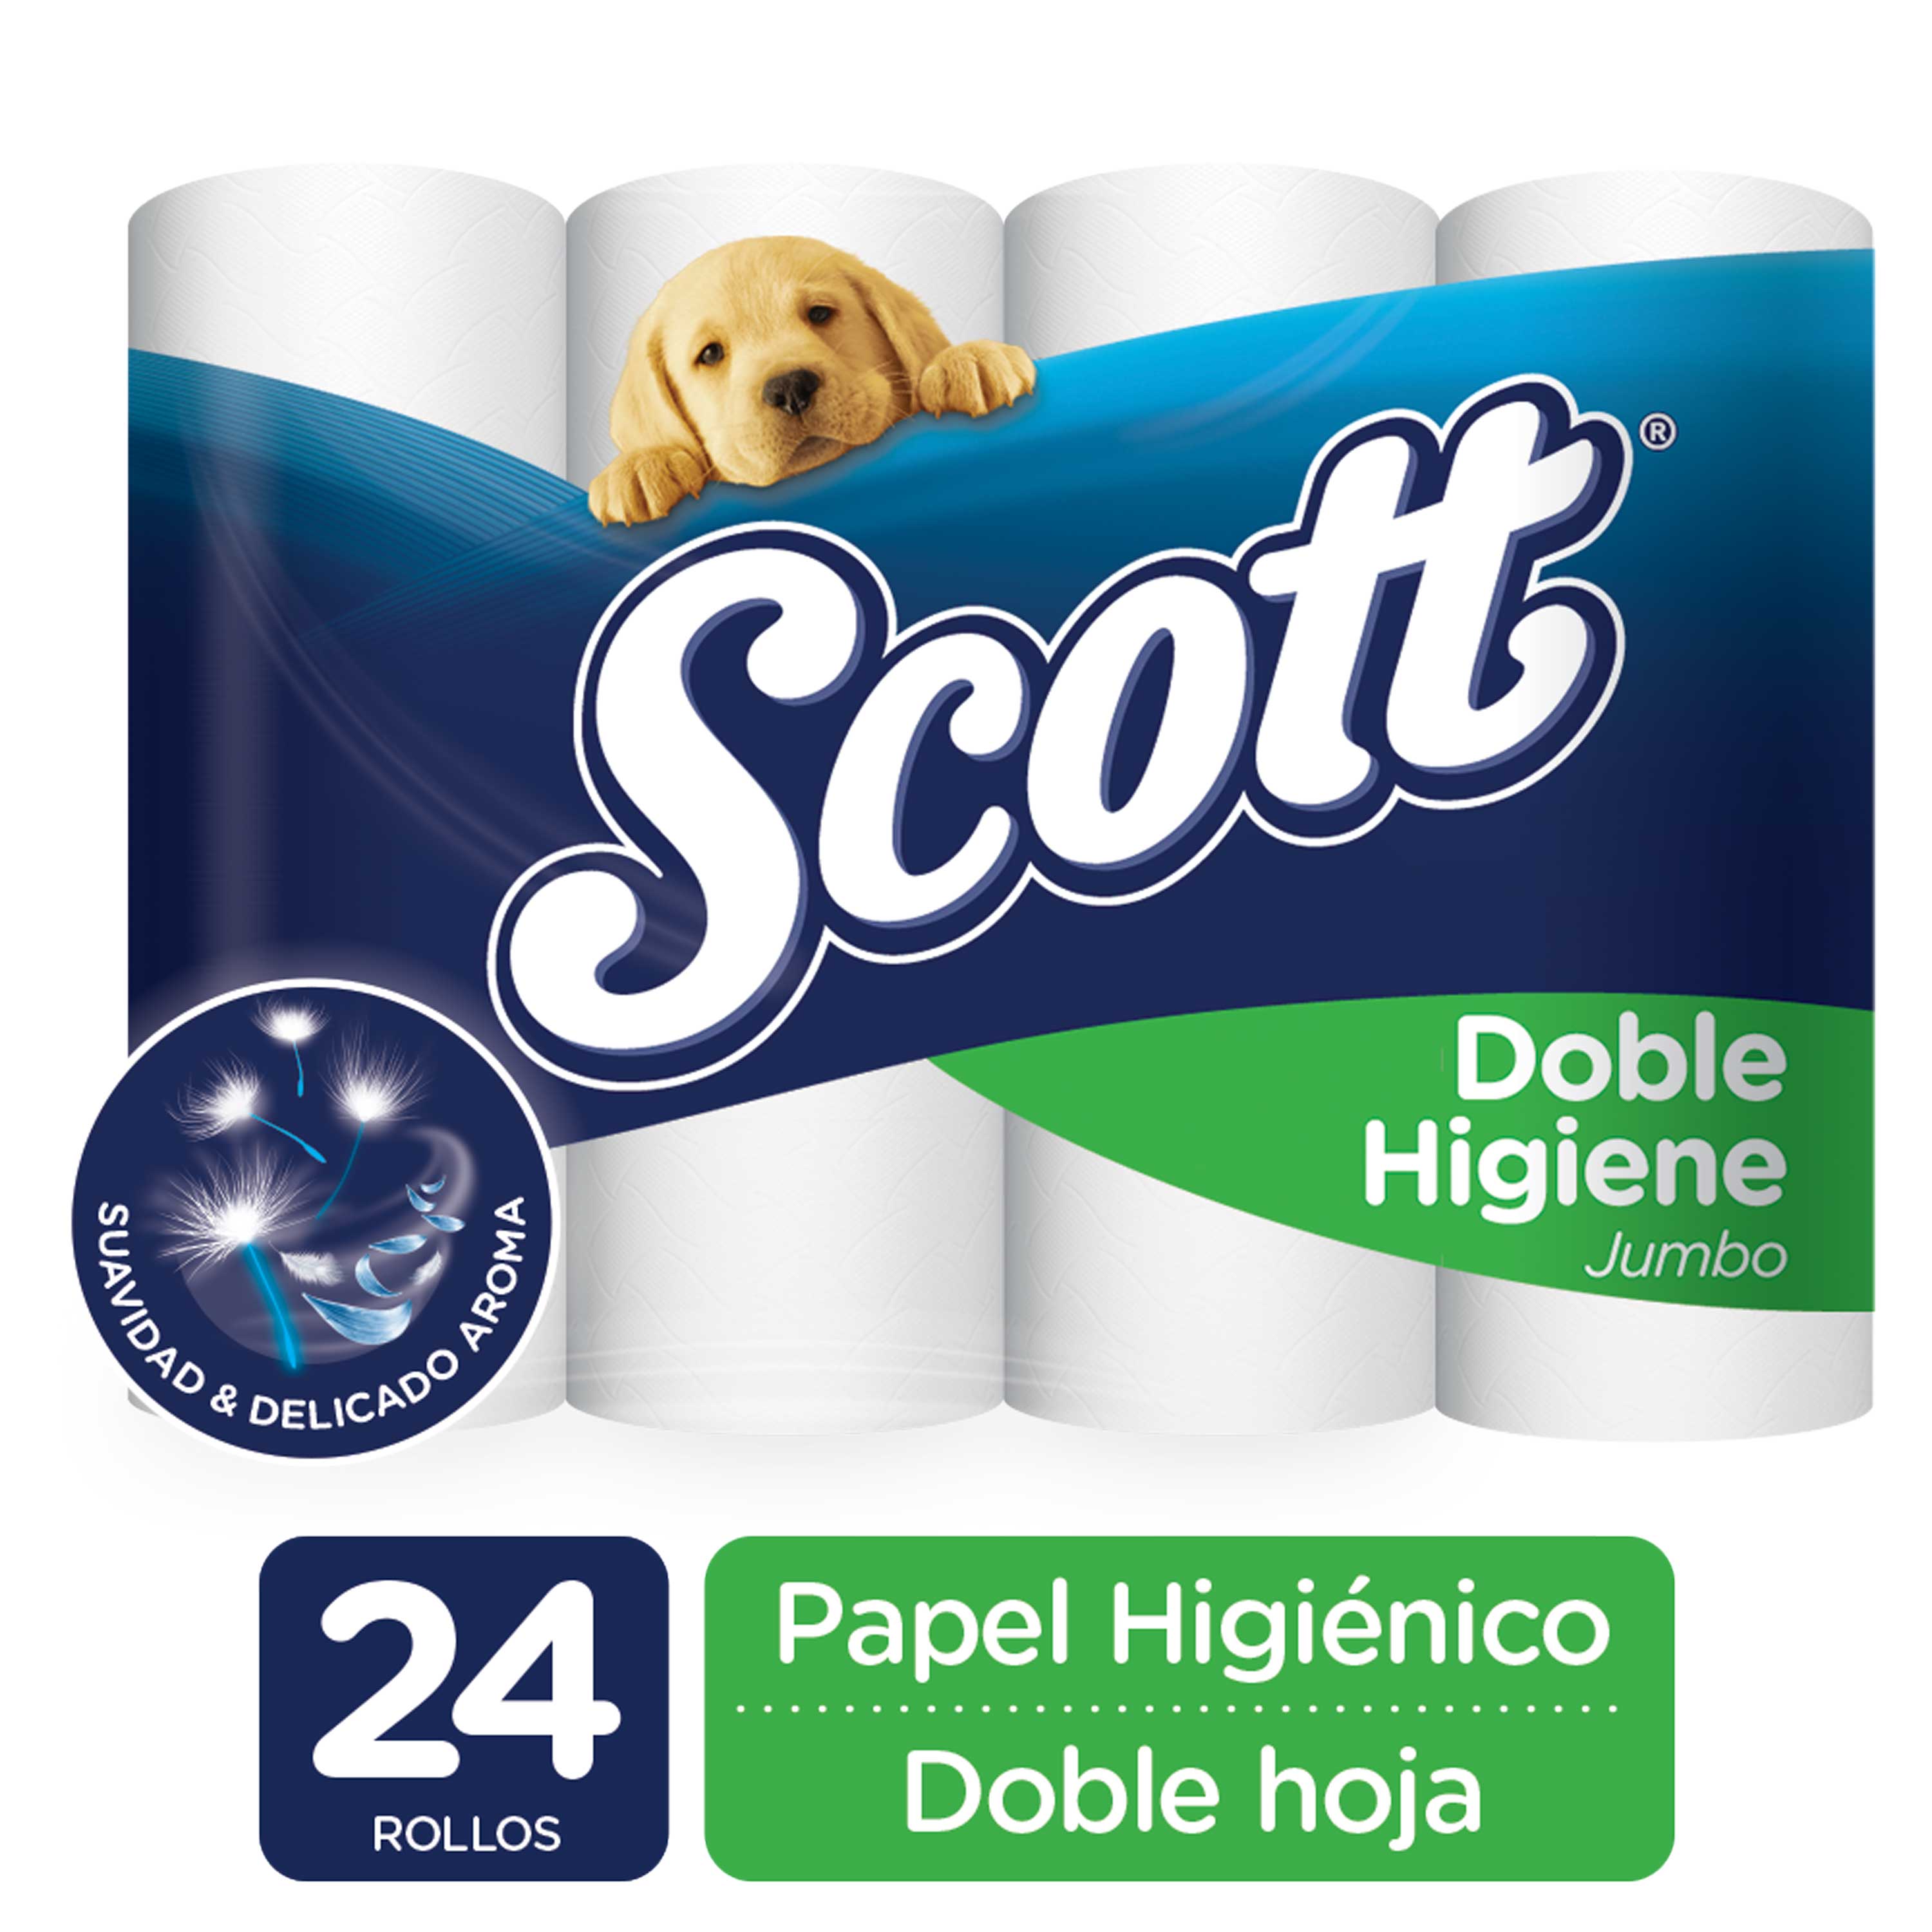 Dependiente alquitrán conducir Papel Higiénico Scott Doble Higiene Doble Hoja - 24 Rollos